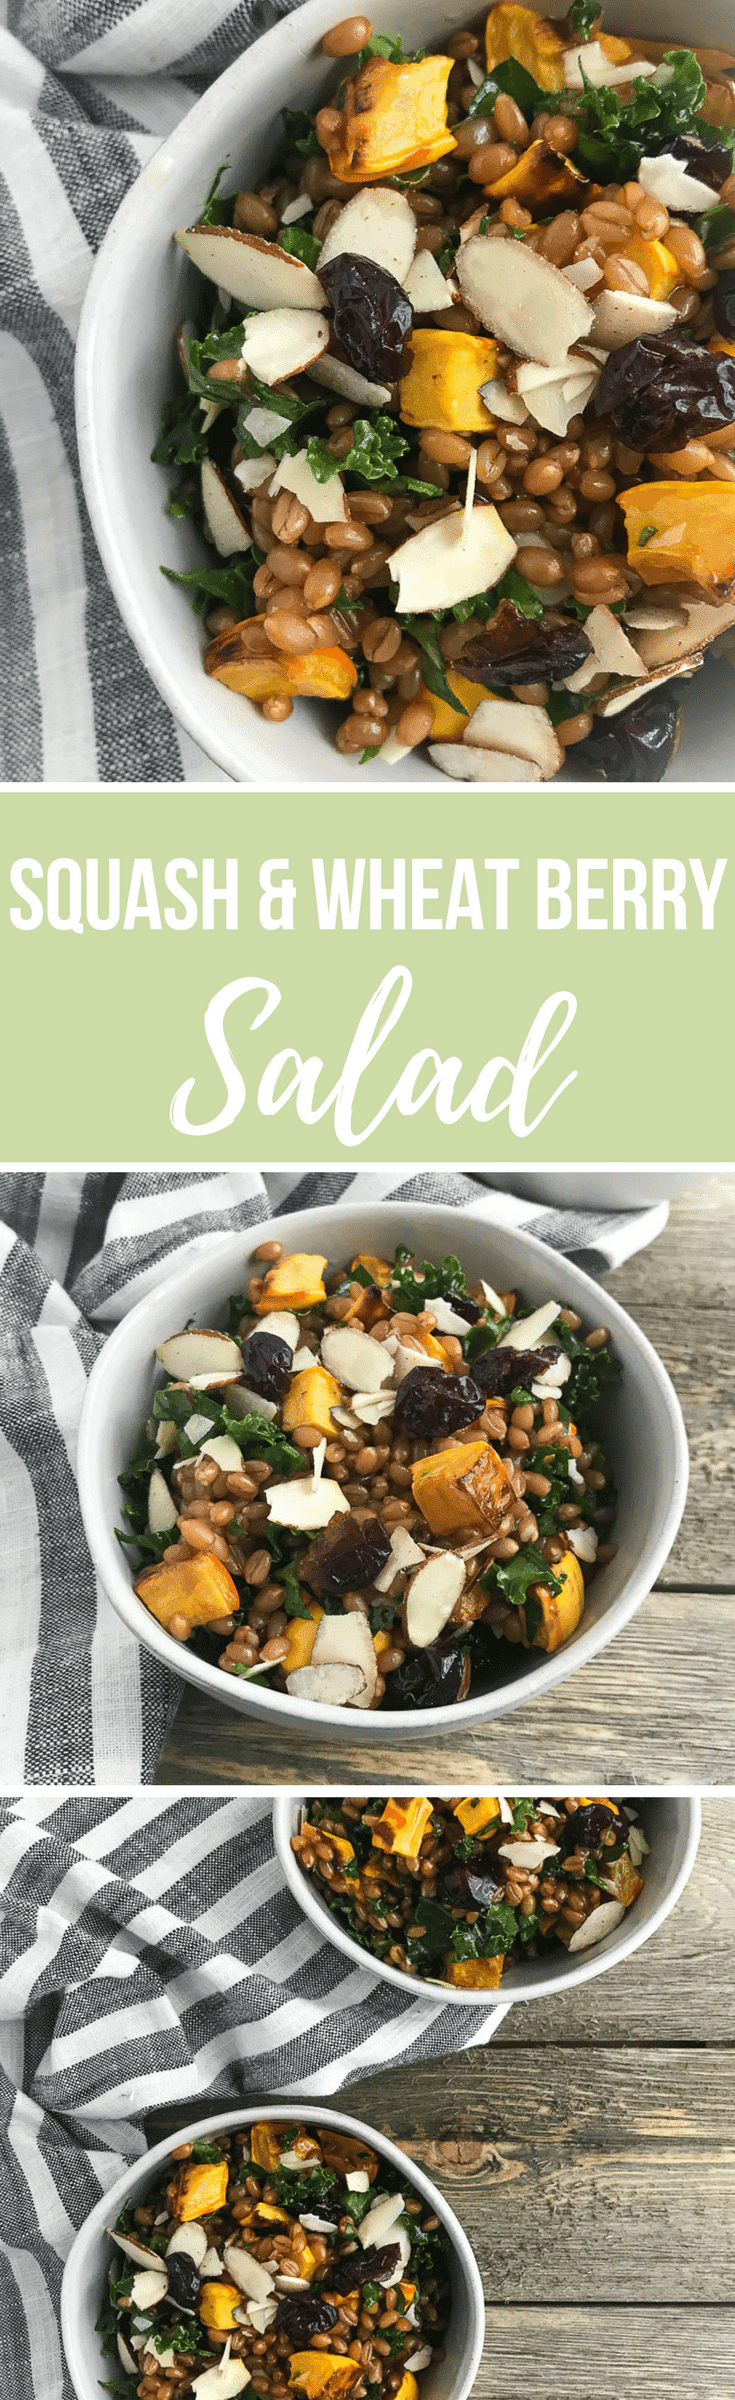 Squash & Wheat Berry Salad via RDelicious Kitchen @RD_Kitchen #wheatberries #wholegrain #squash #sidedish #salad